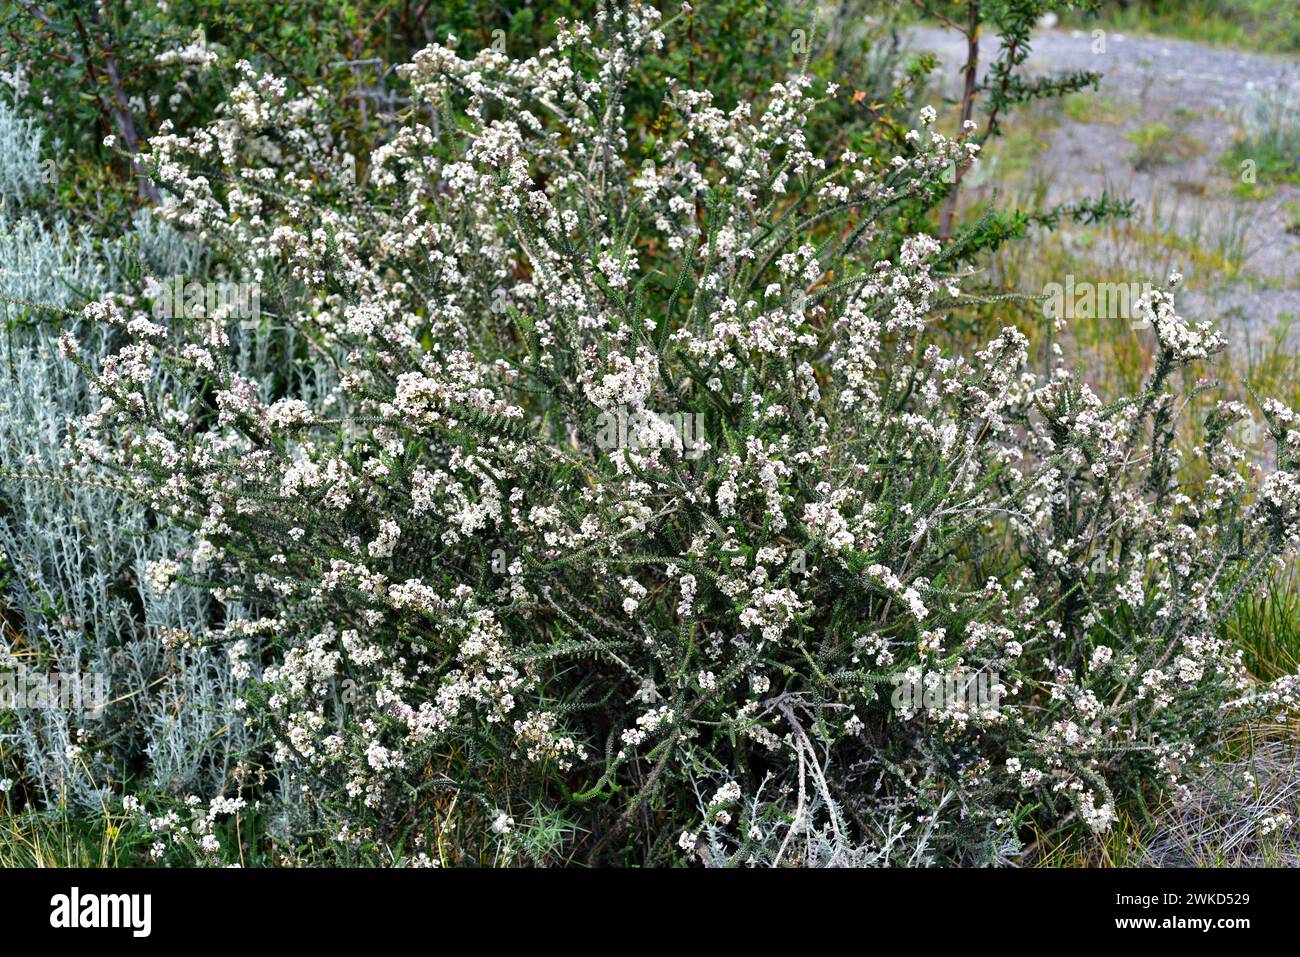 Black bush or mata negra (Mulguraea tridens or Junellia tridens) is a shrub native to Magallanes Region (Argentina and Chile). This photo was taken in Stock Photo